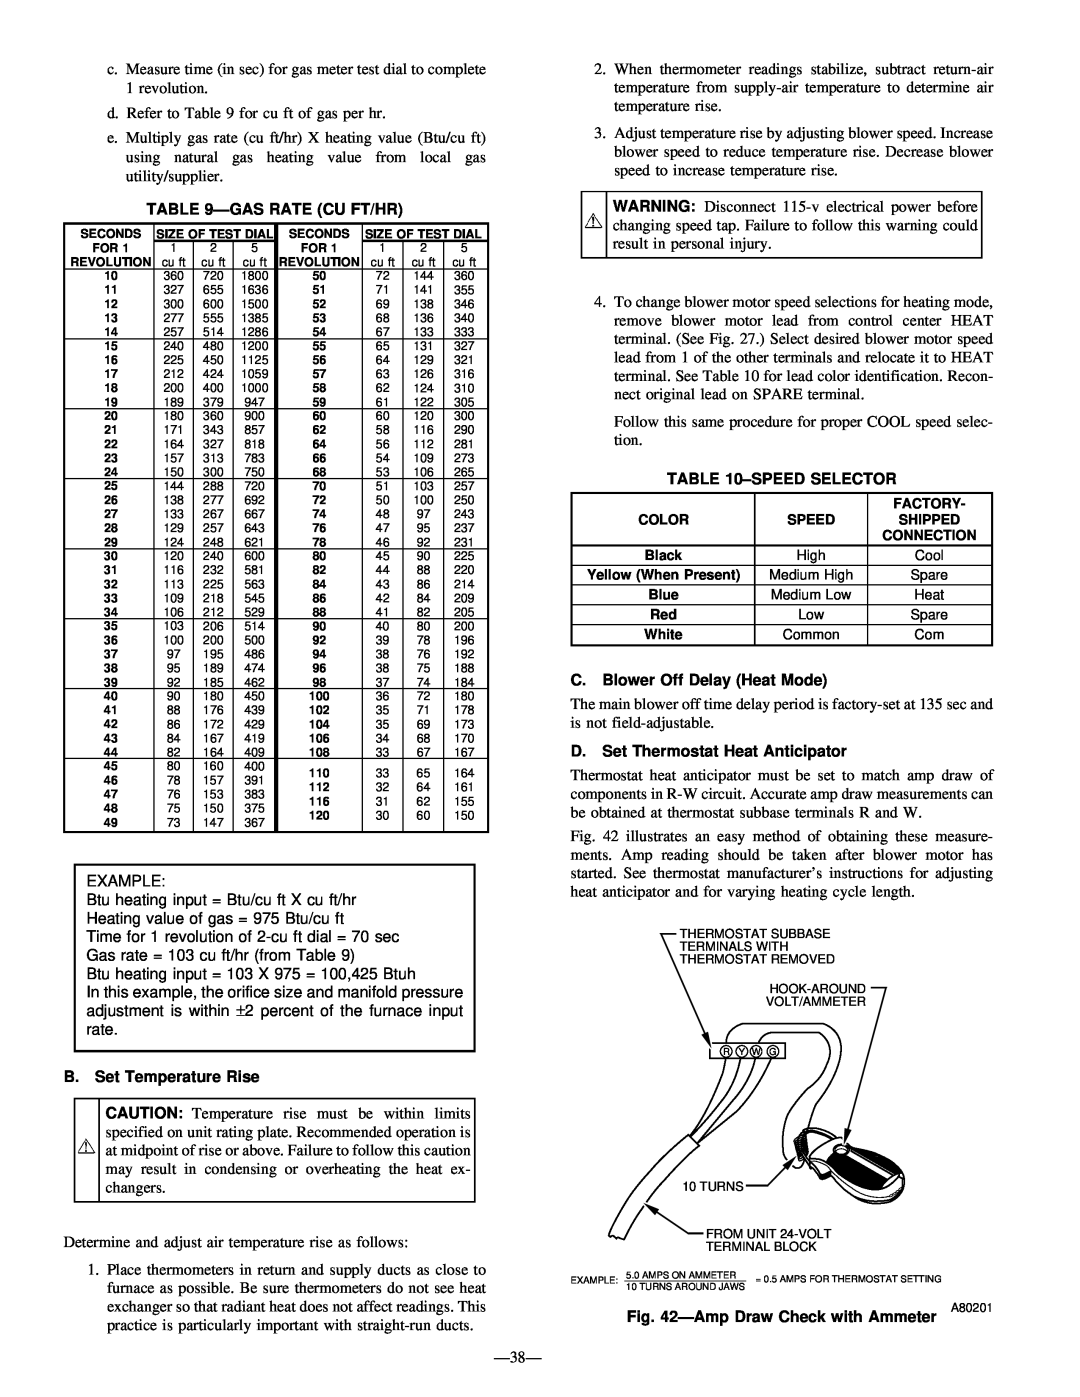 Bryant 345MAV instruction manual Ðgas Rate Cu Ft/Hr, B.Set Temperature Rise, ±Speed Selector, C.Blower Off Delay Heat Mode 